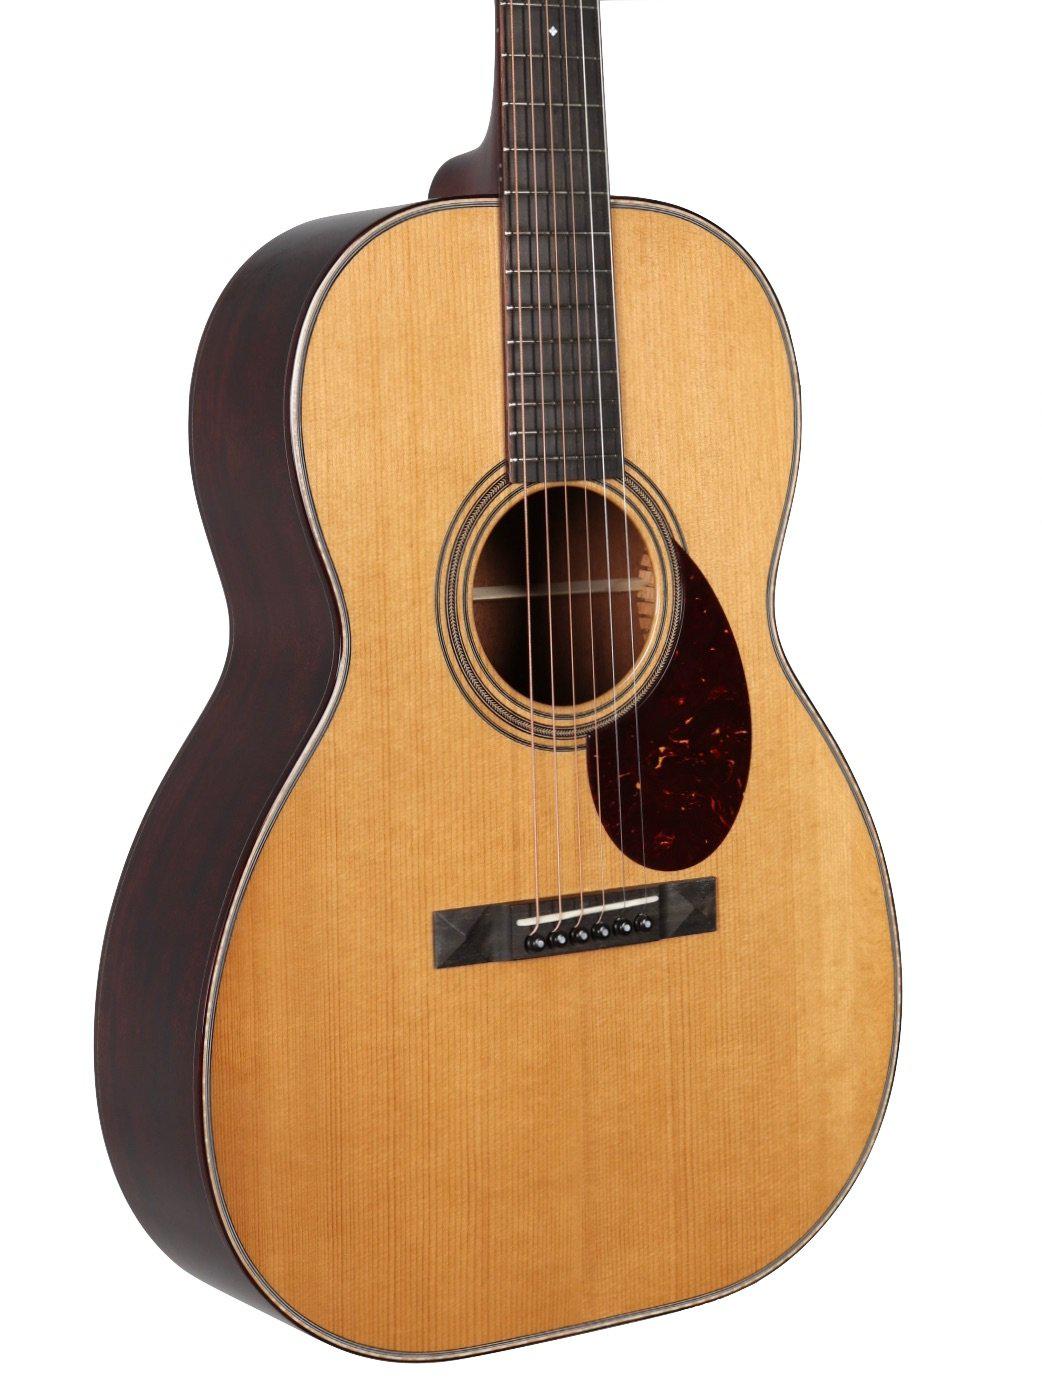 Larrivee L-09 12 String Indian Rosewood Pre-Owned #113030 - Larrivee Guitars - Heartbreaker Guitars